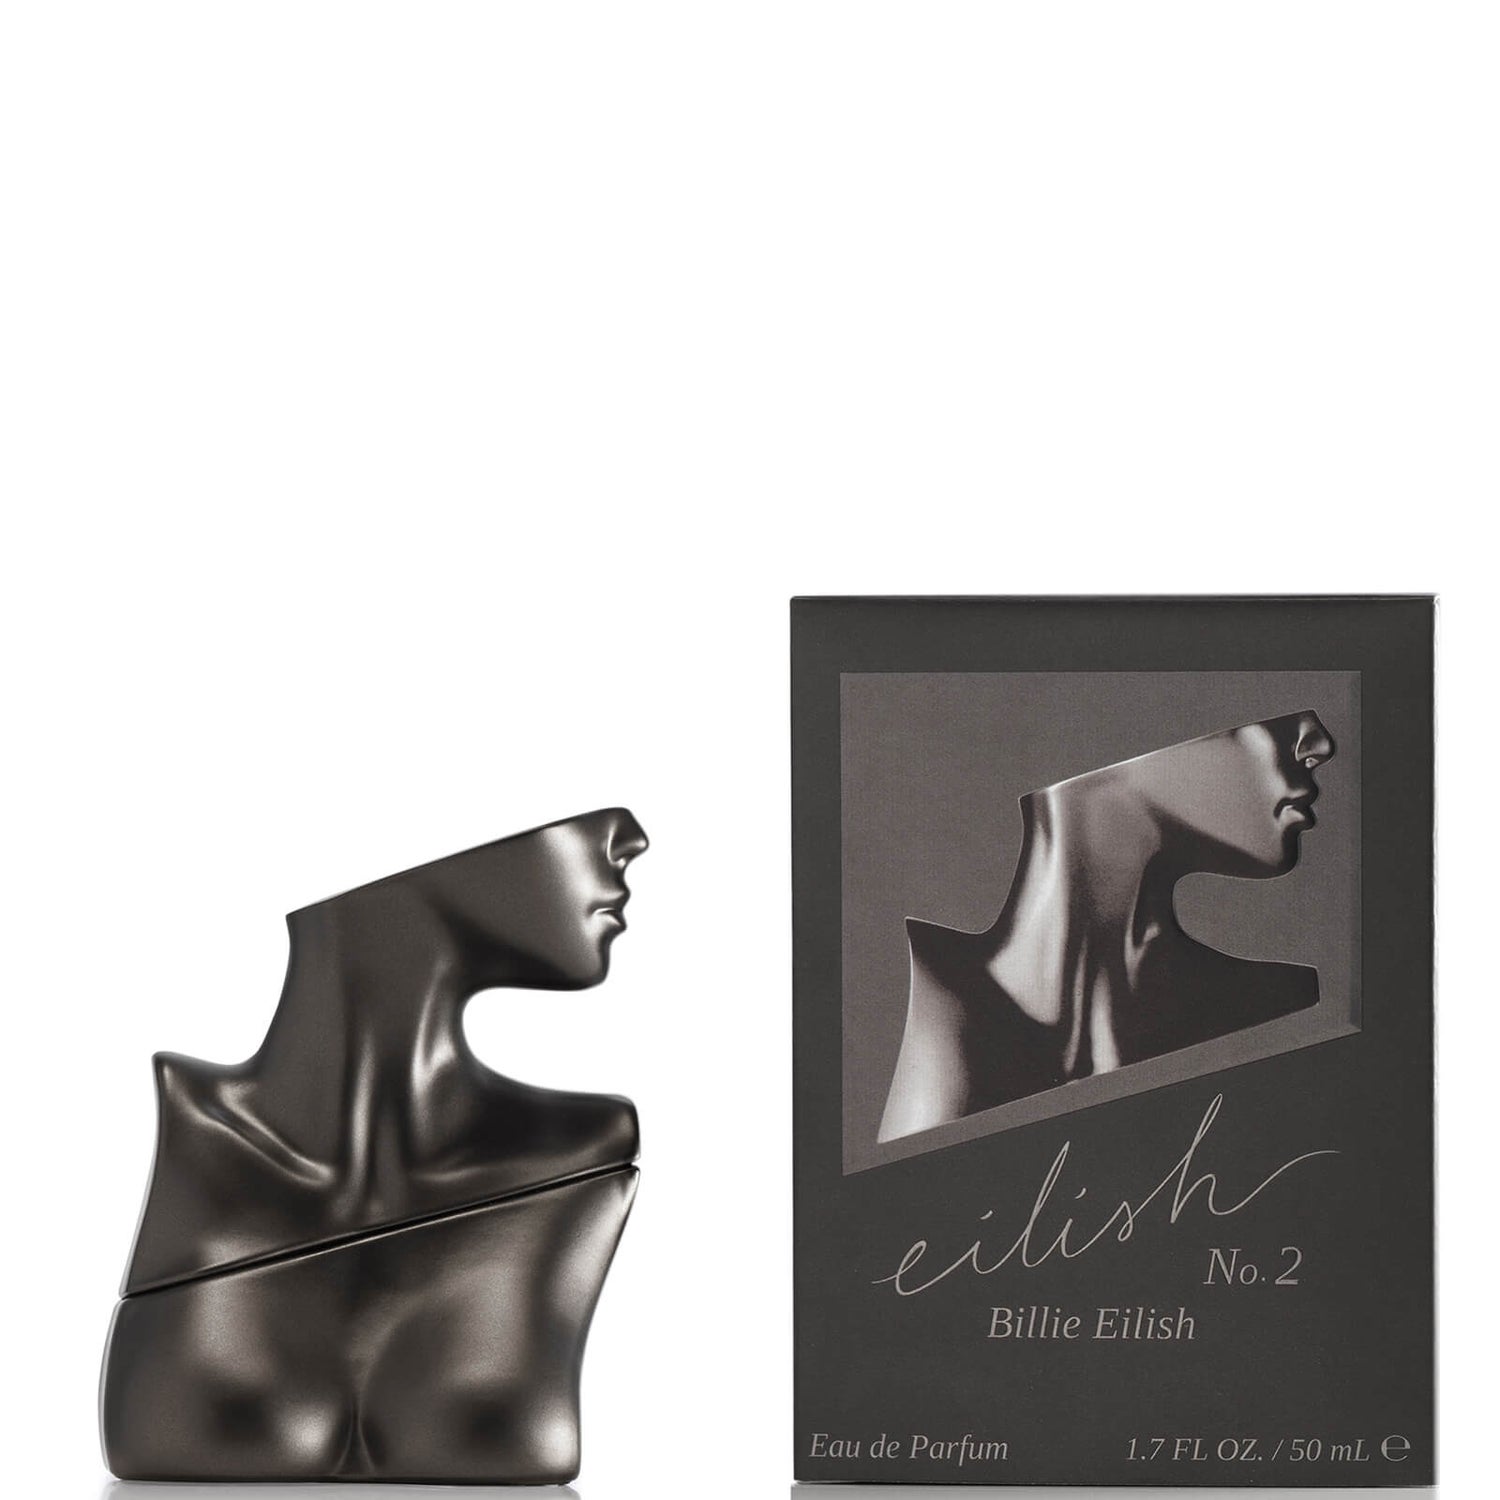 Eilish by Billie Eilish No. 2 Eau de Parfum 50ml